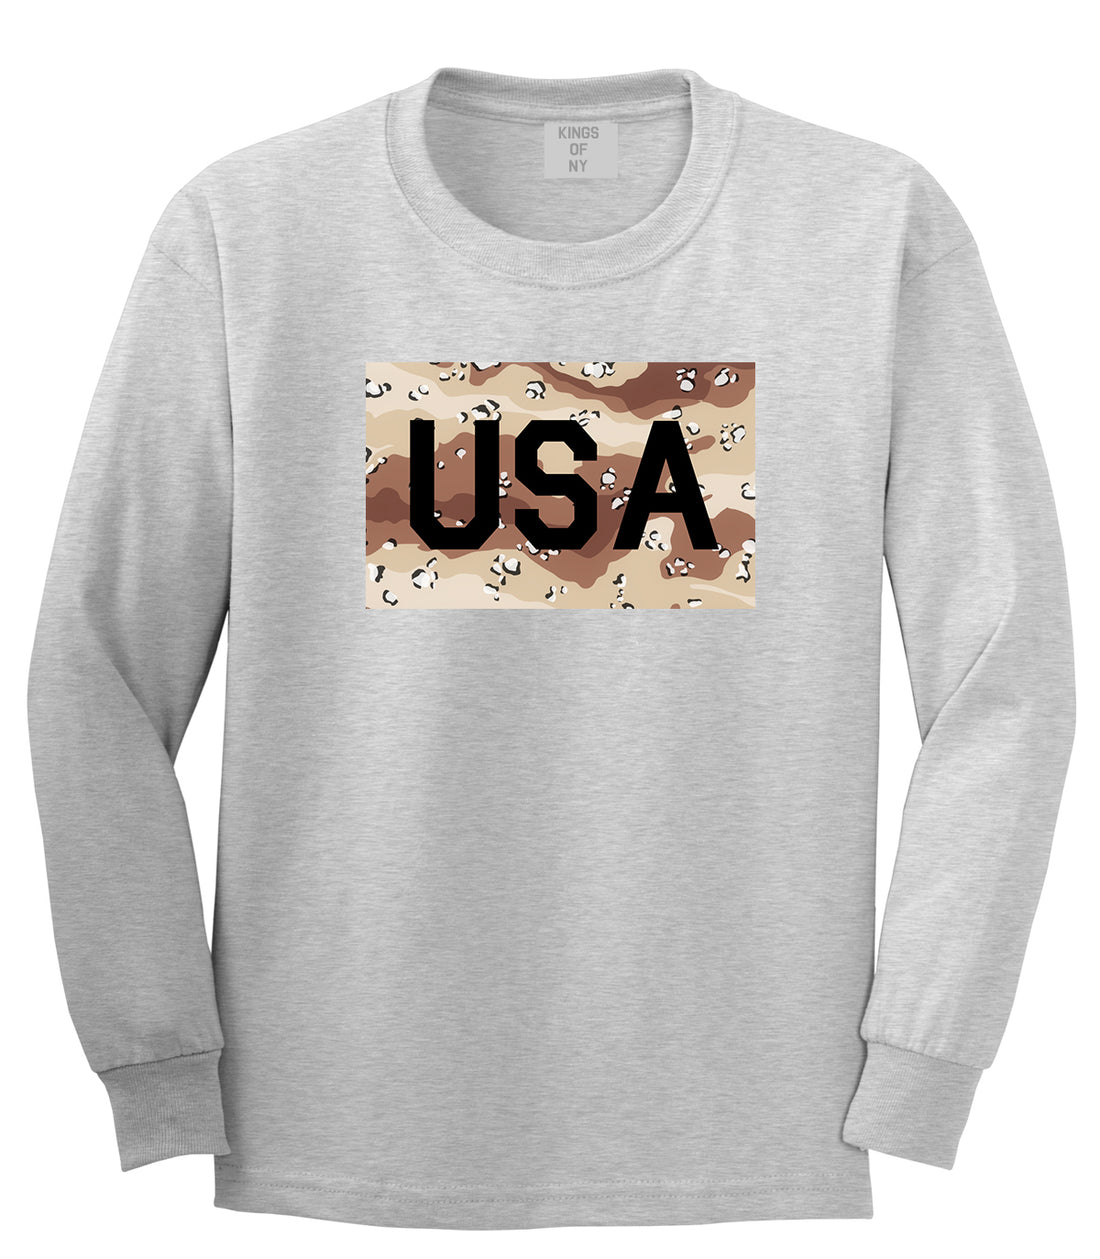 USA Desert Camo Army Mens Grey Long Sleeve T-Shirt by Kings Of NY